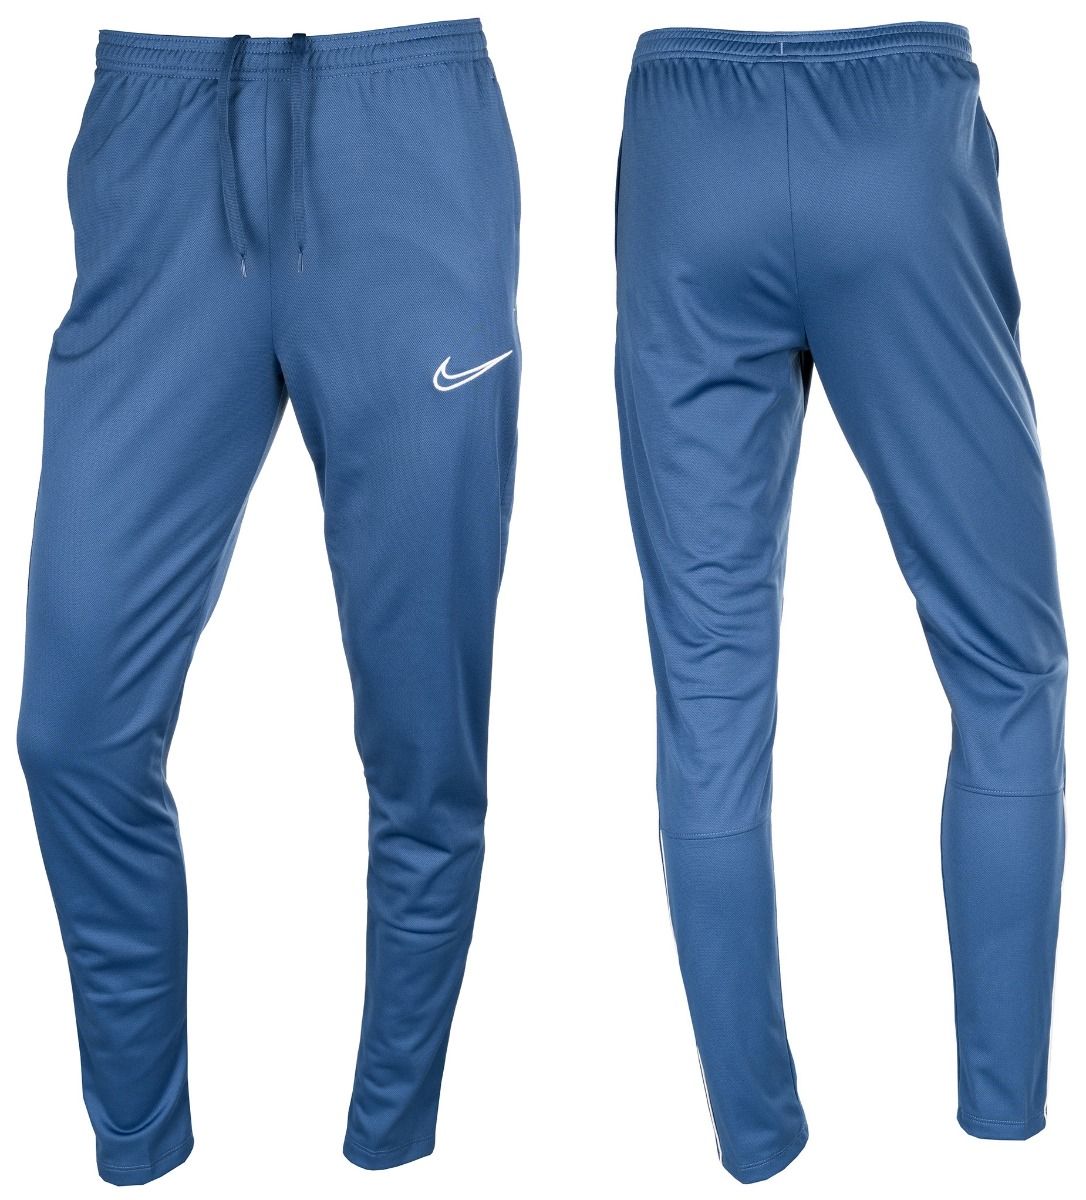 Nike Trening pentru femei Dry Acd21 Trk Suit DC2096 410